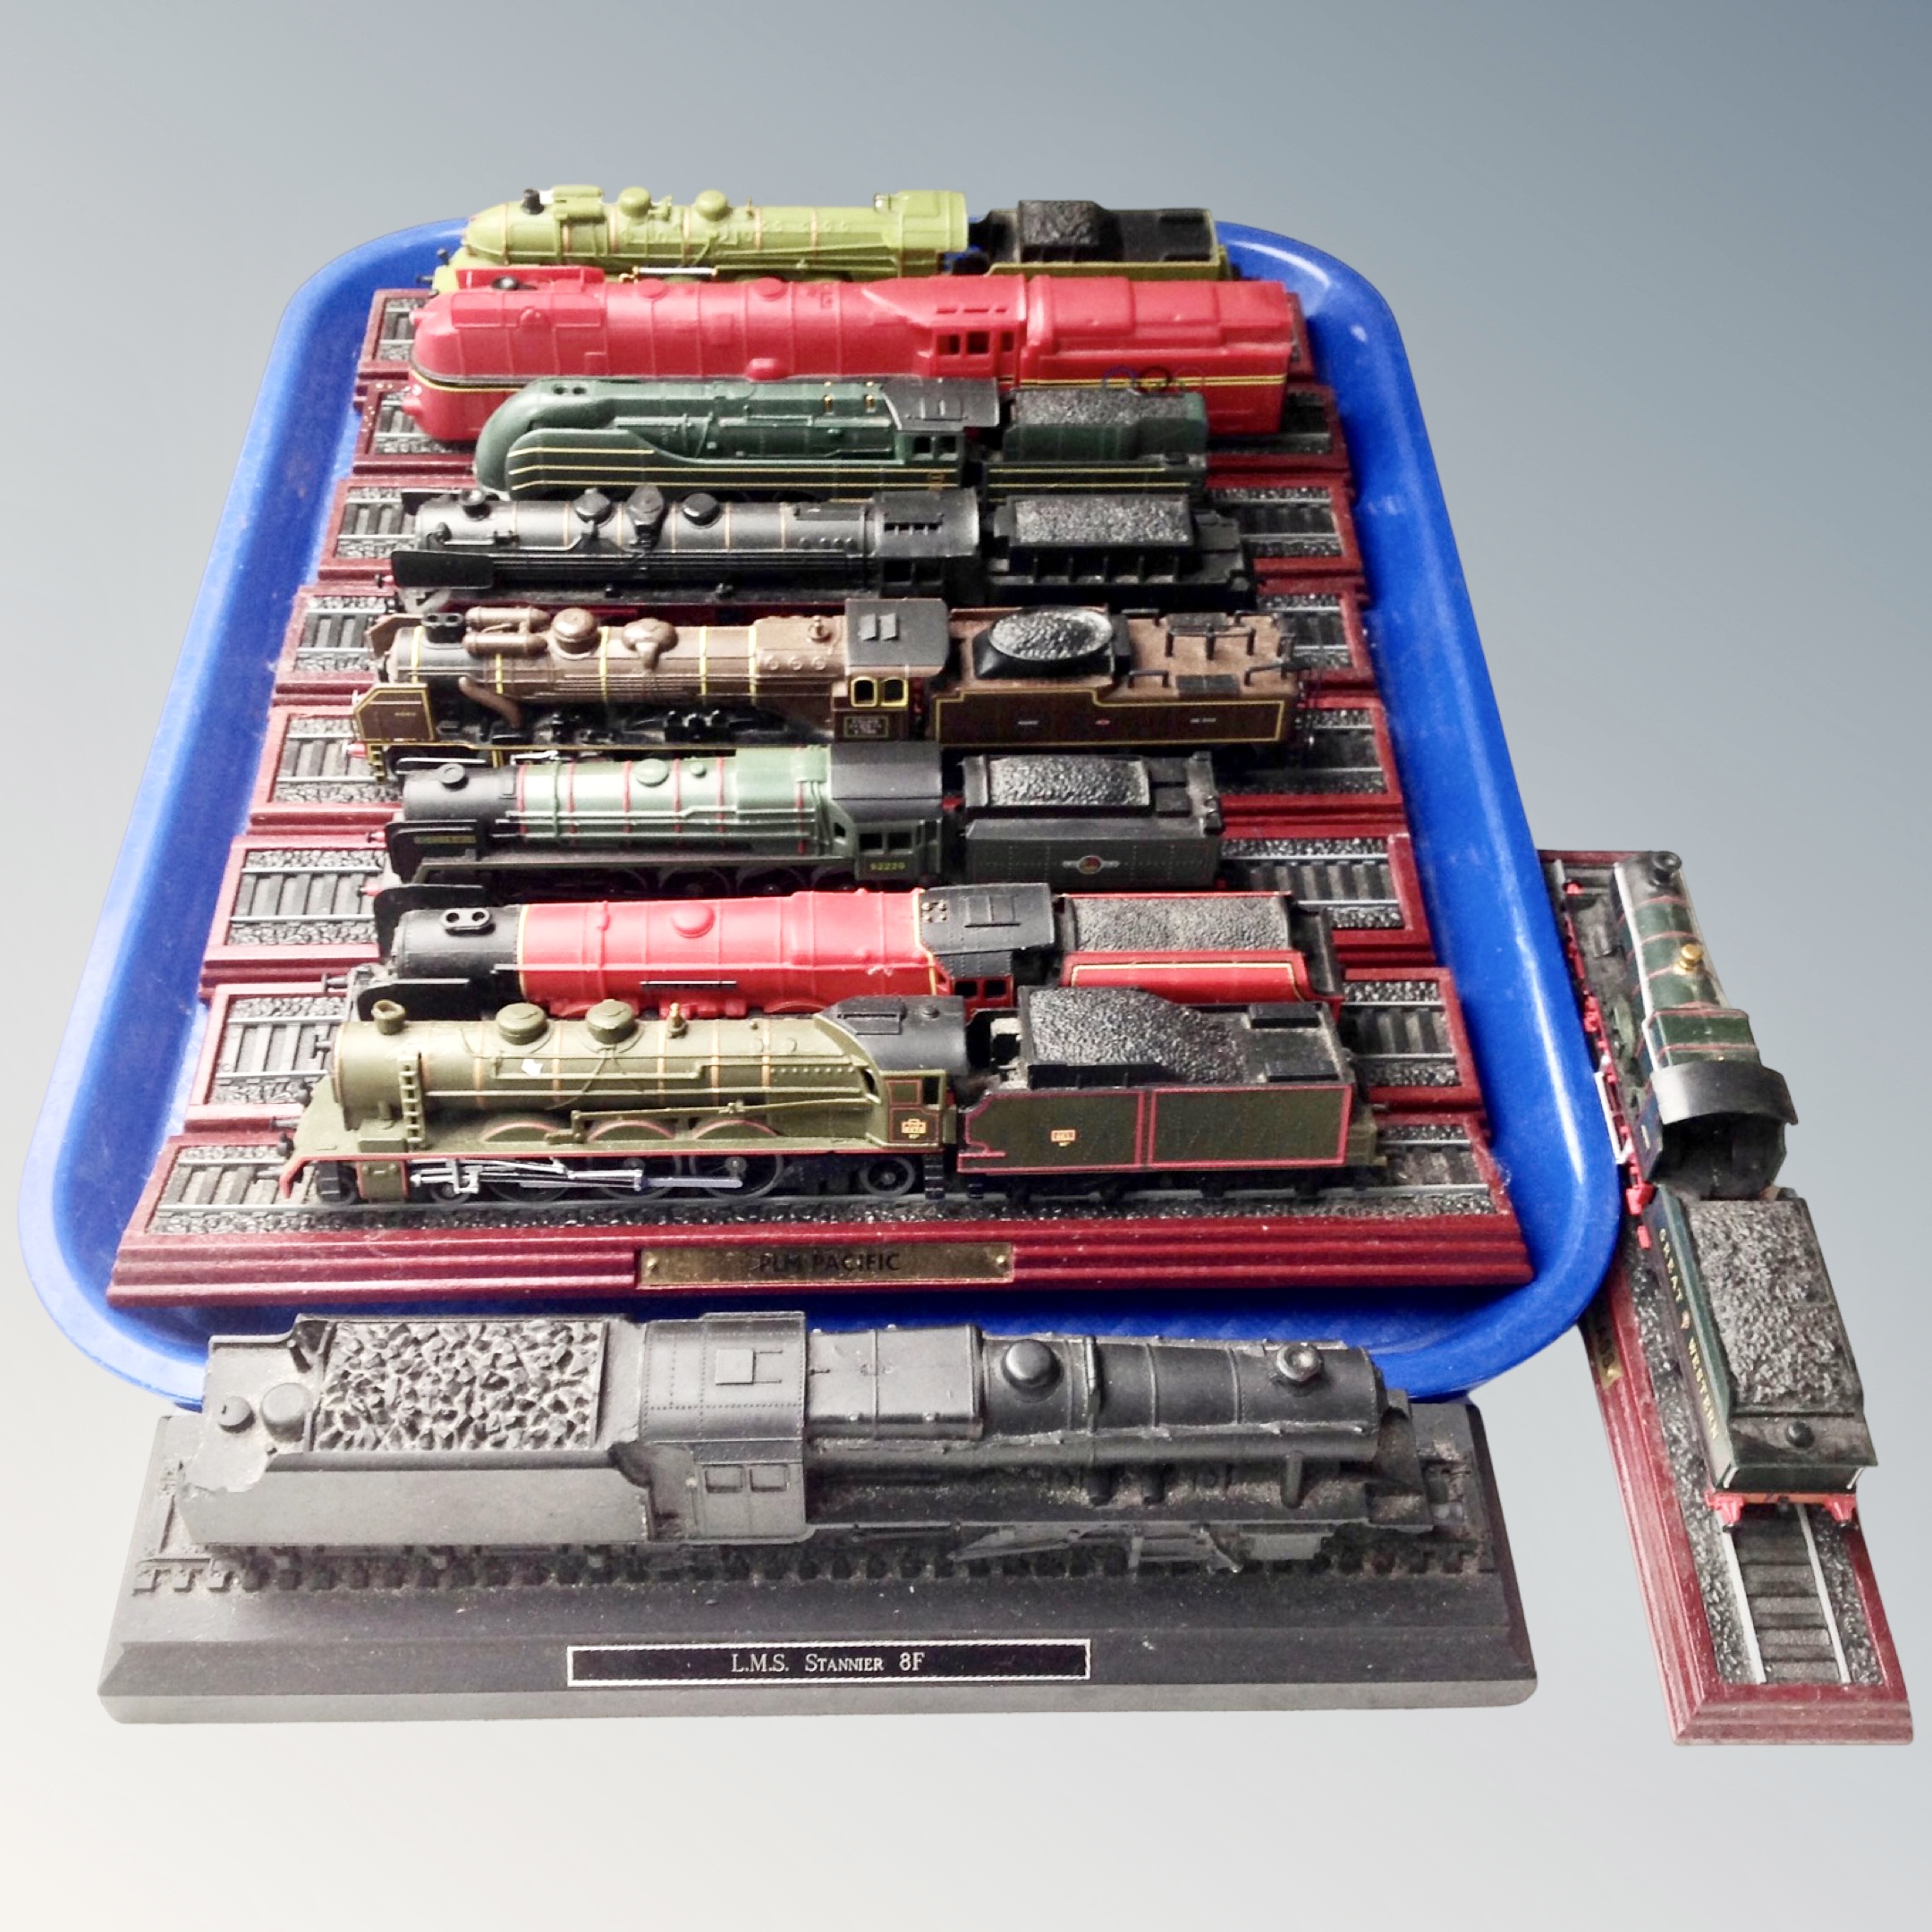 A collection of model train locomotives on plinths, prints of locomotives, etc.